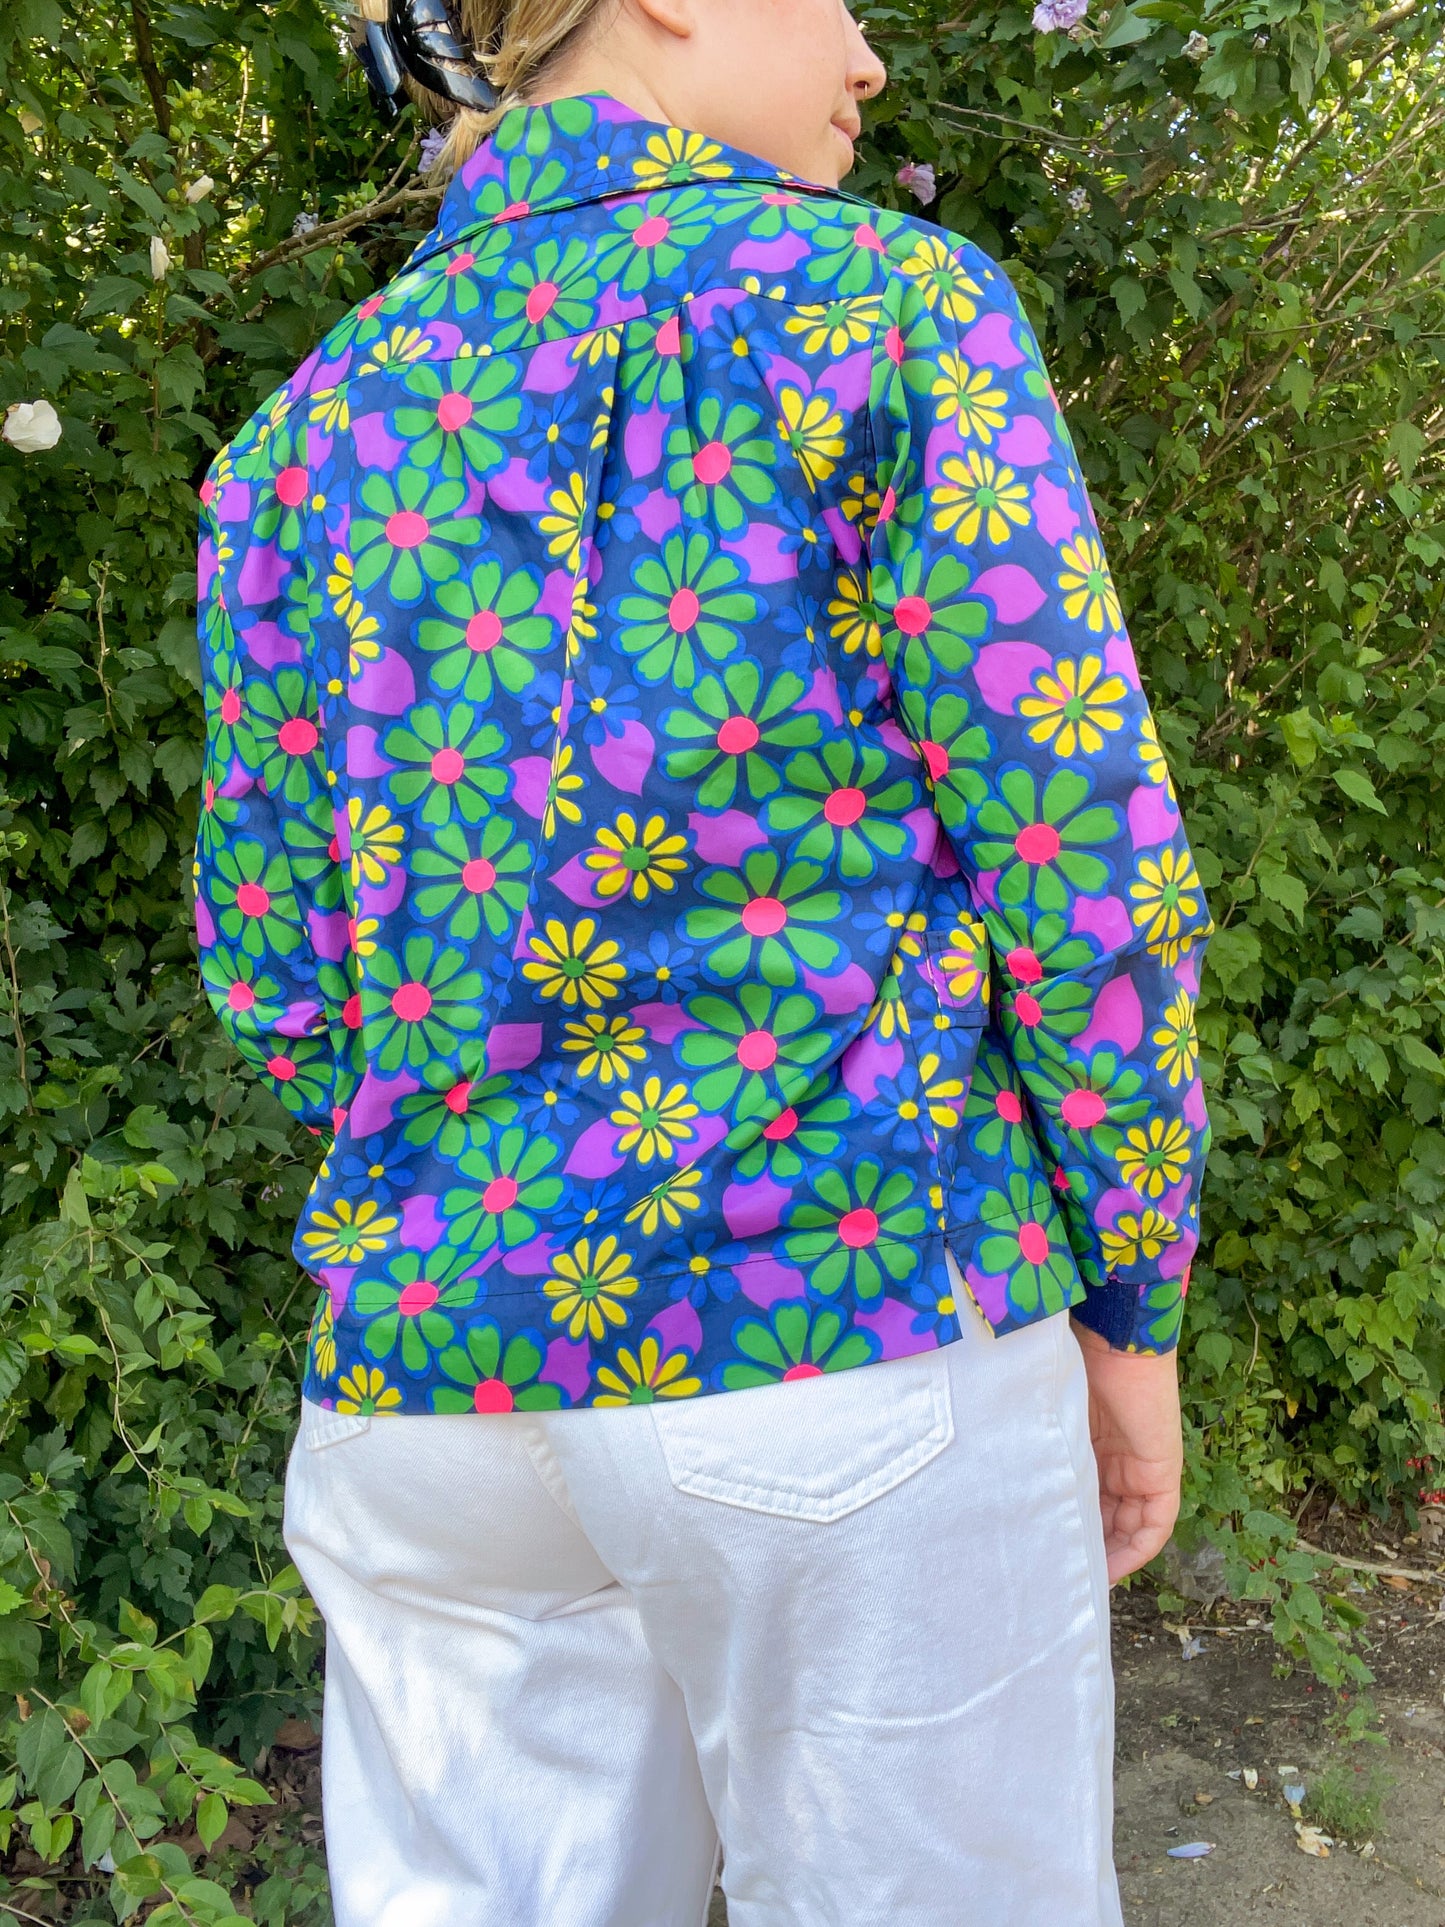 60s Mod Colorful Floral Rain Jacket Windbreaker (M/L)